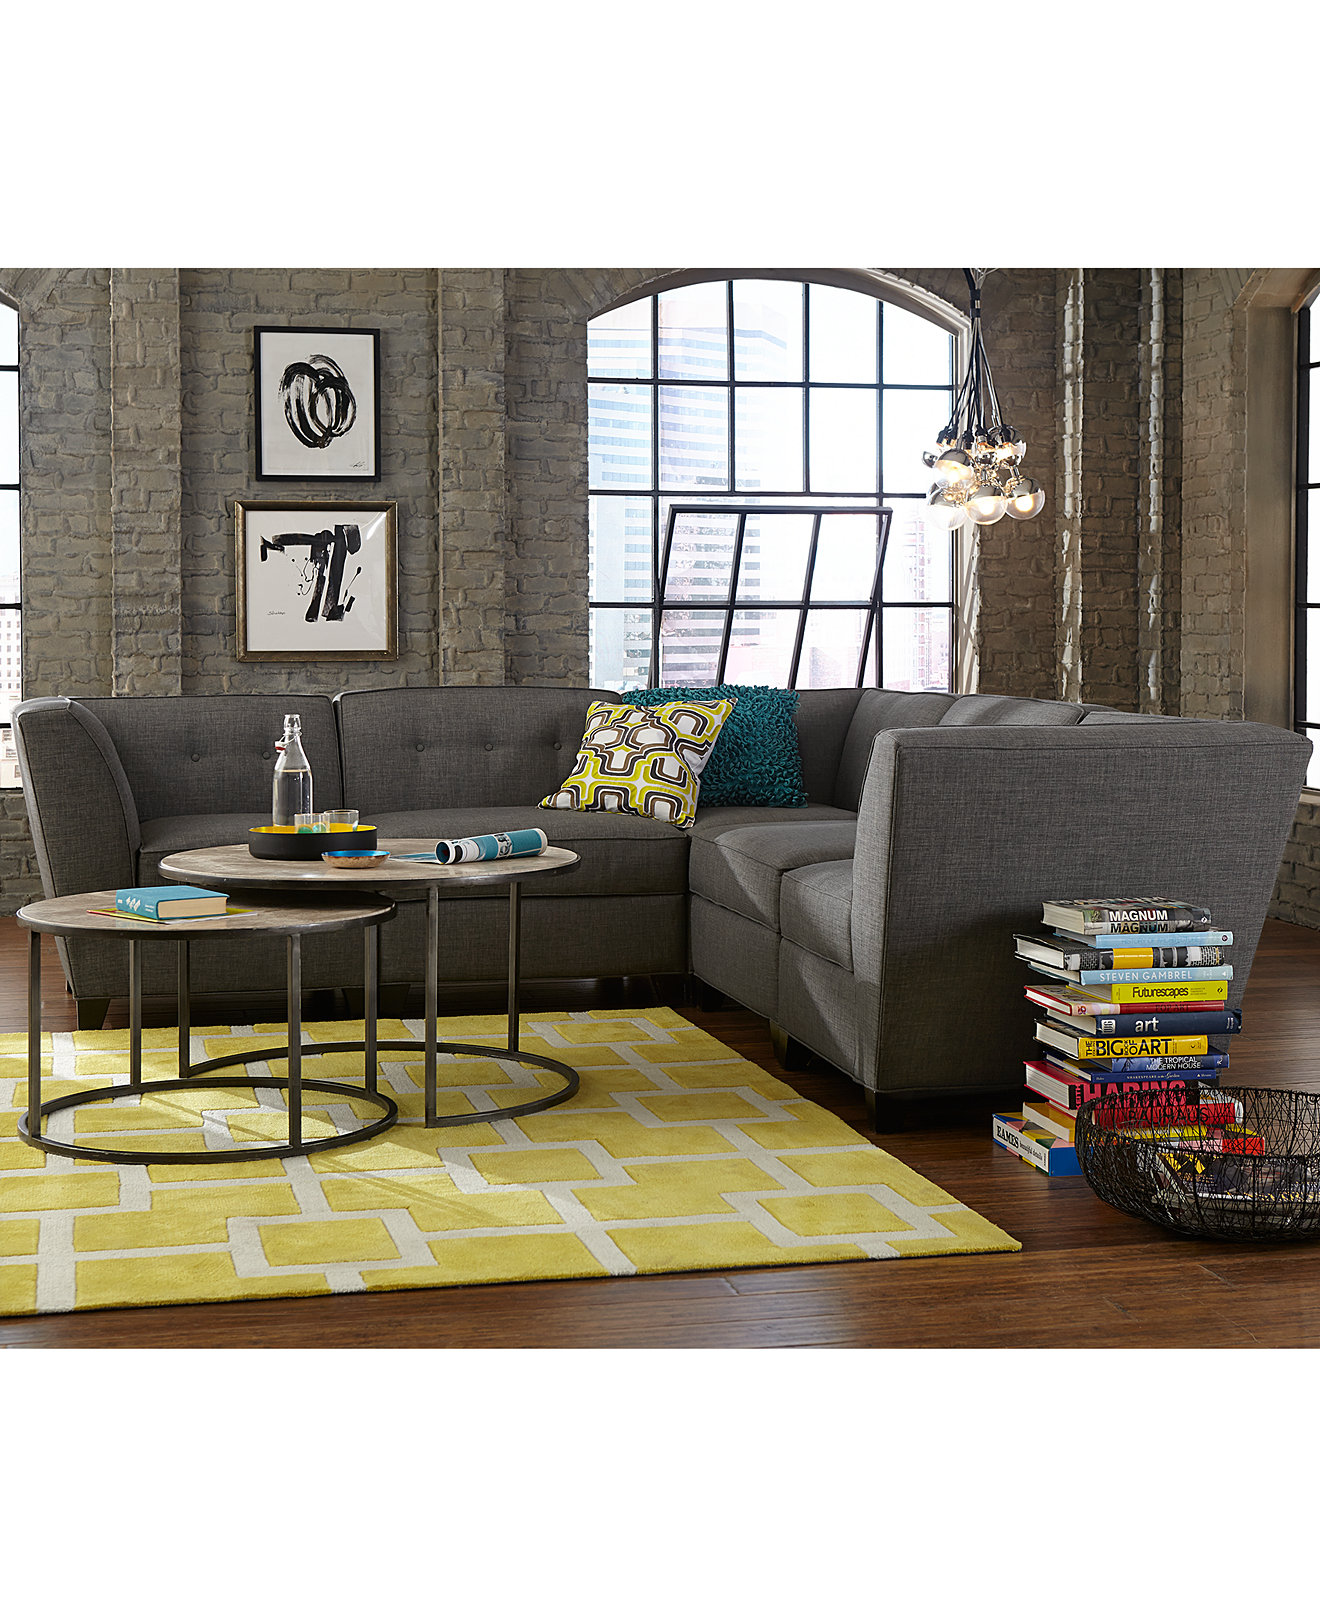 Living Room Furniture Sets Macy s